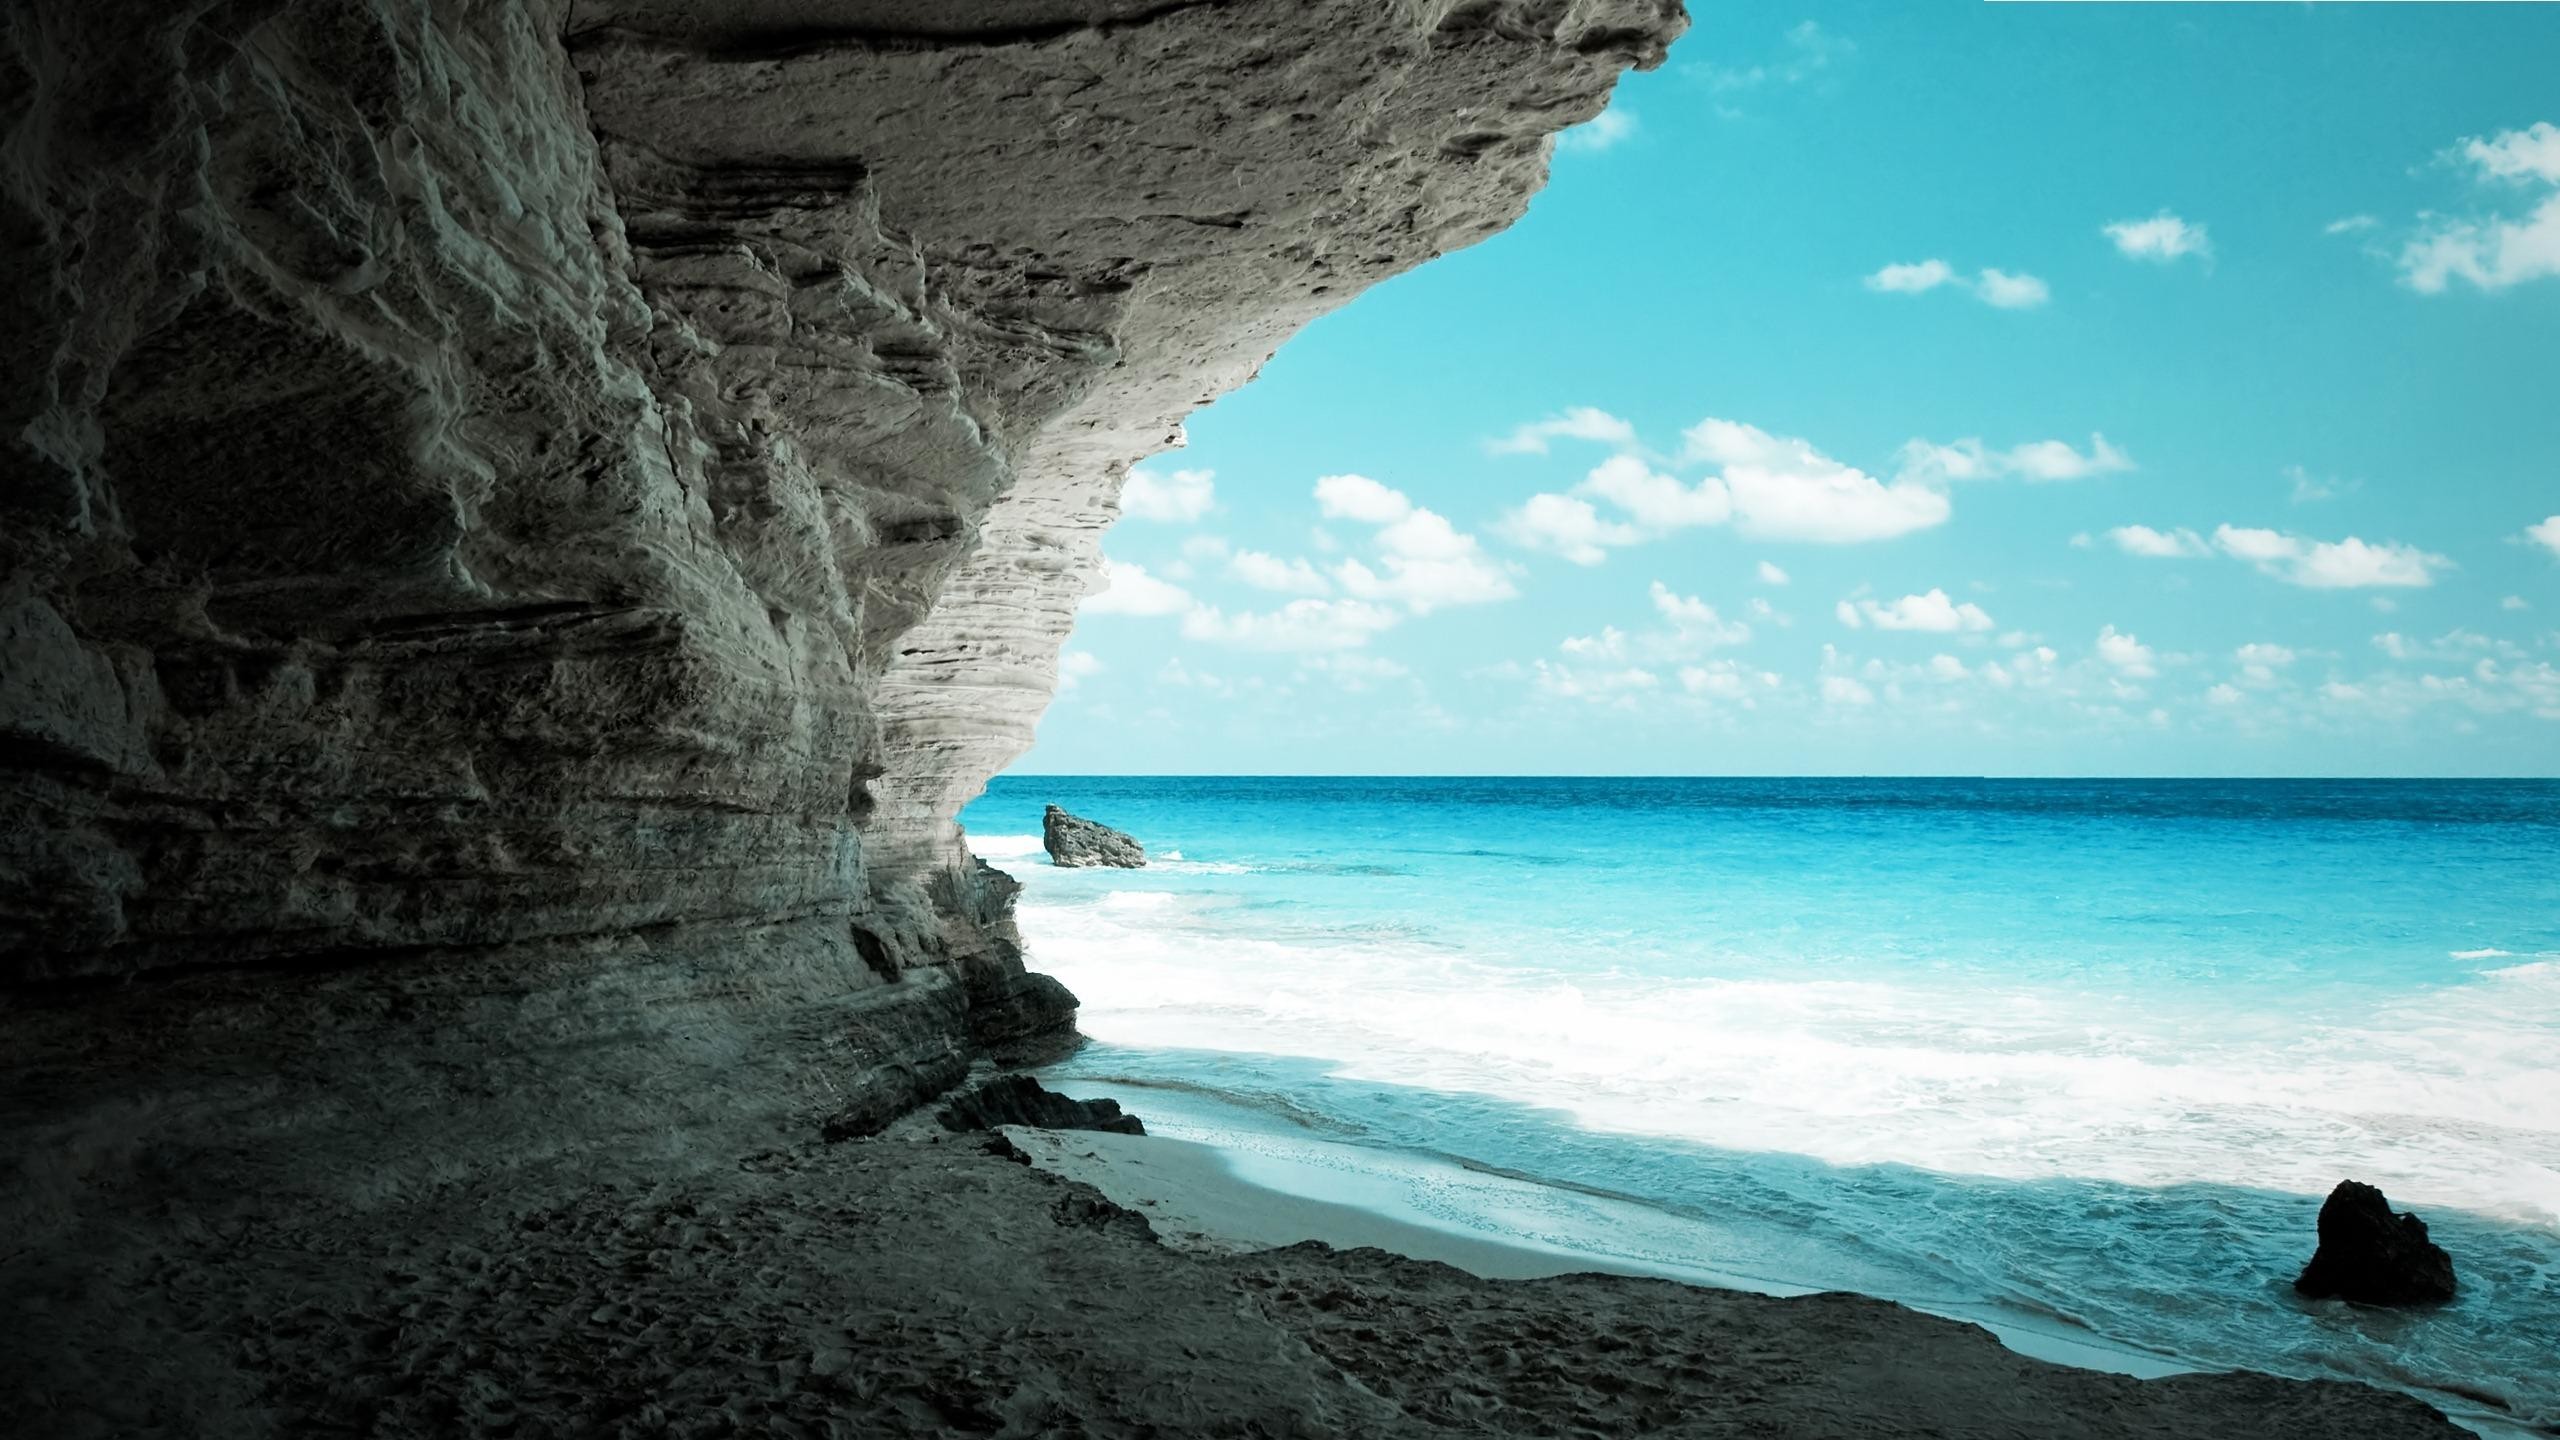 2560x1440 ... amazing beach desktop wallpaper hd nature desktop images ...